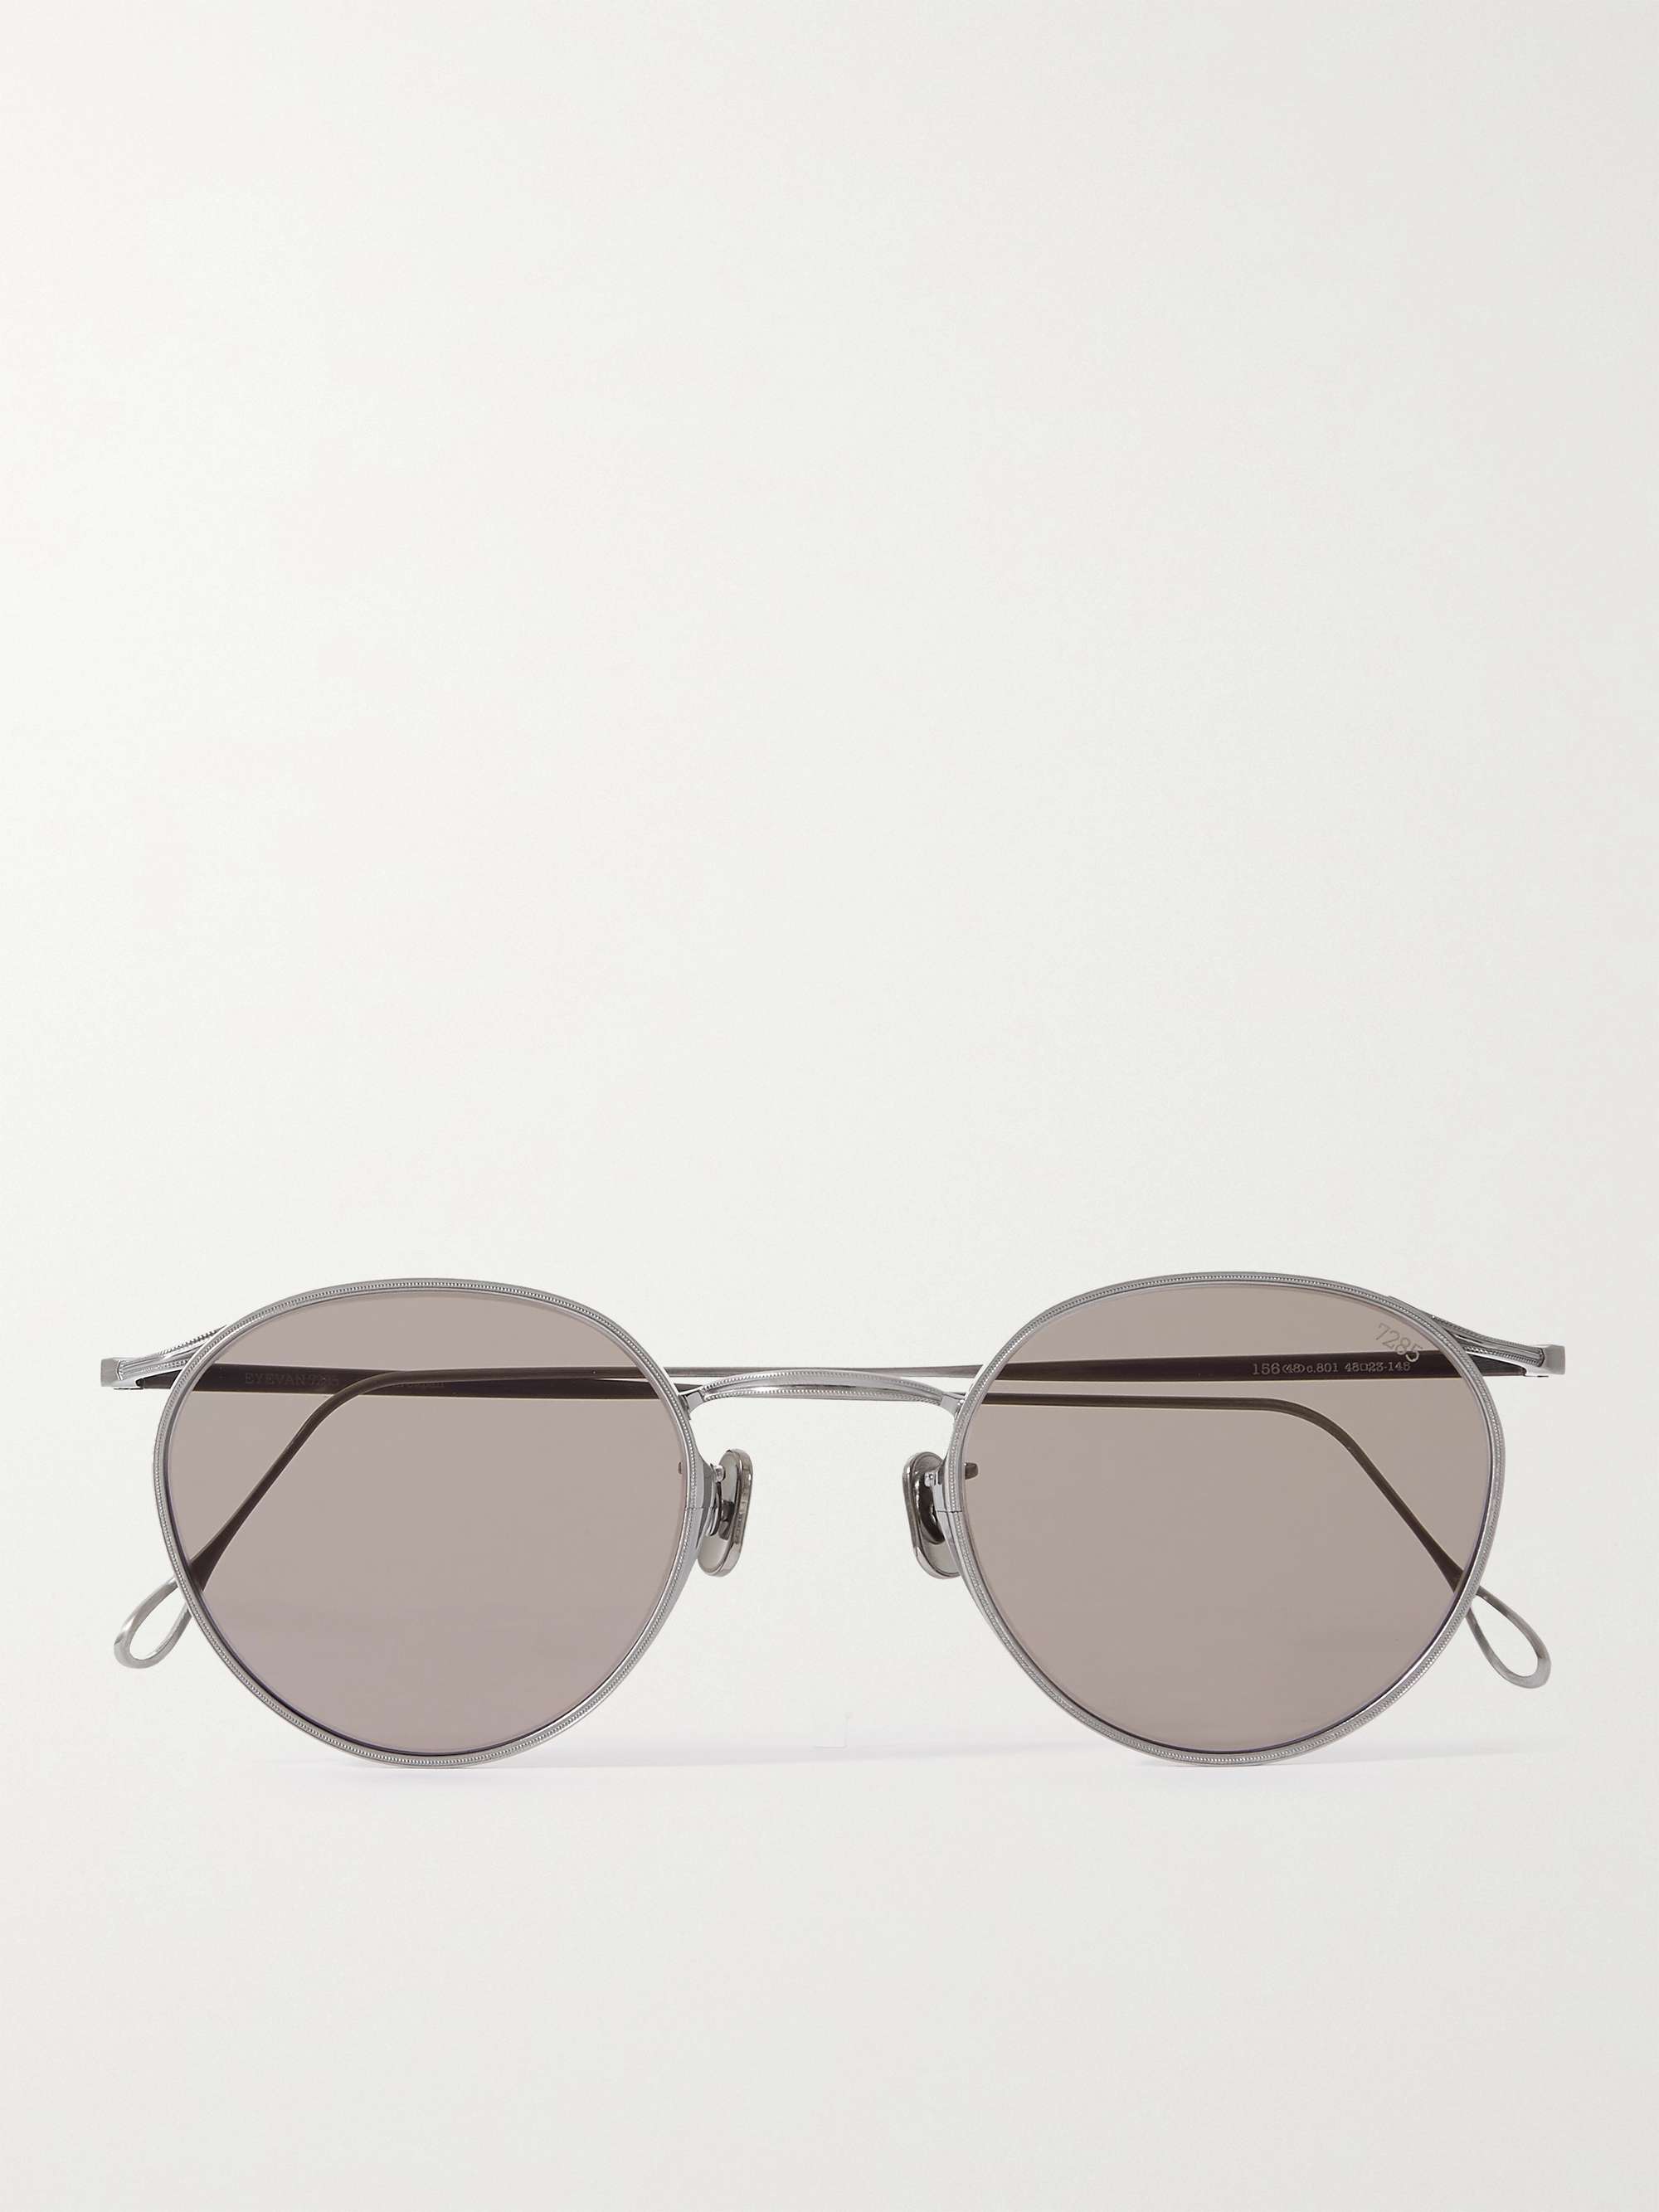 EYEVAN 7285 Round-Frame Titanium Sunglasses